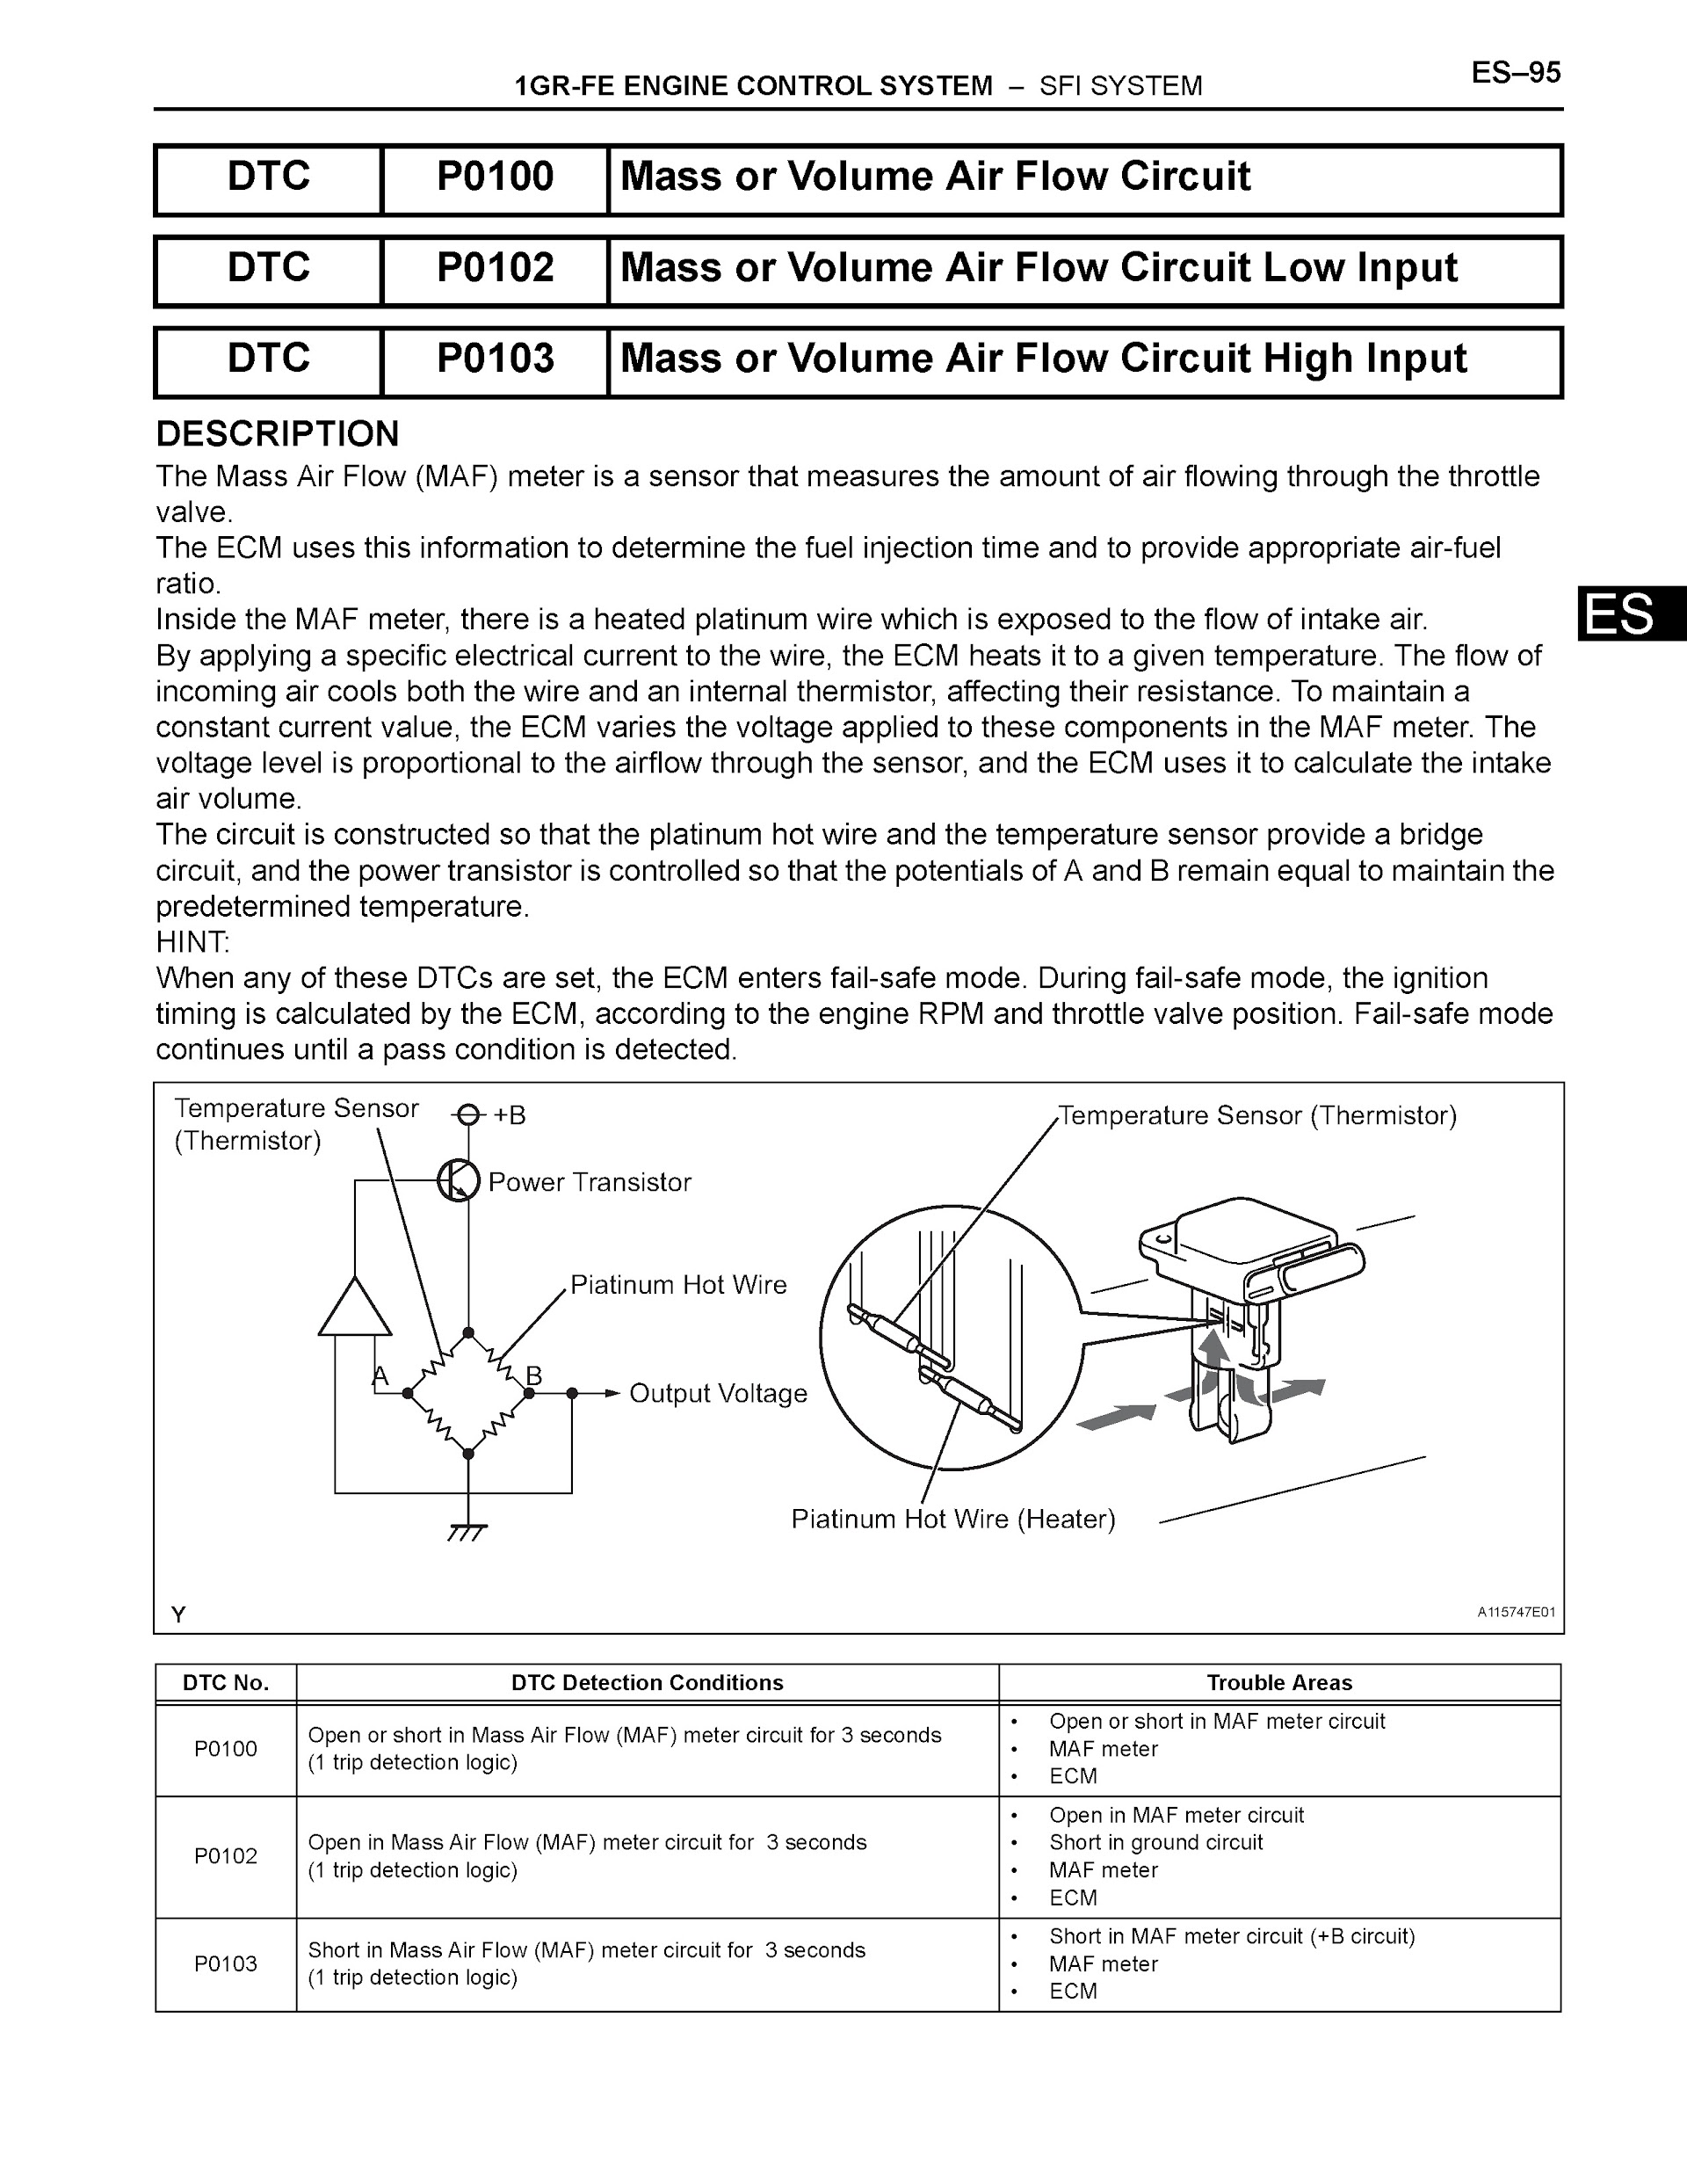 2008 Toyota Tacoma Repair Manual, 1GR-FE SFI System